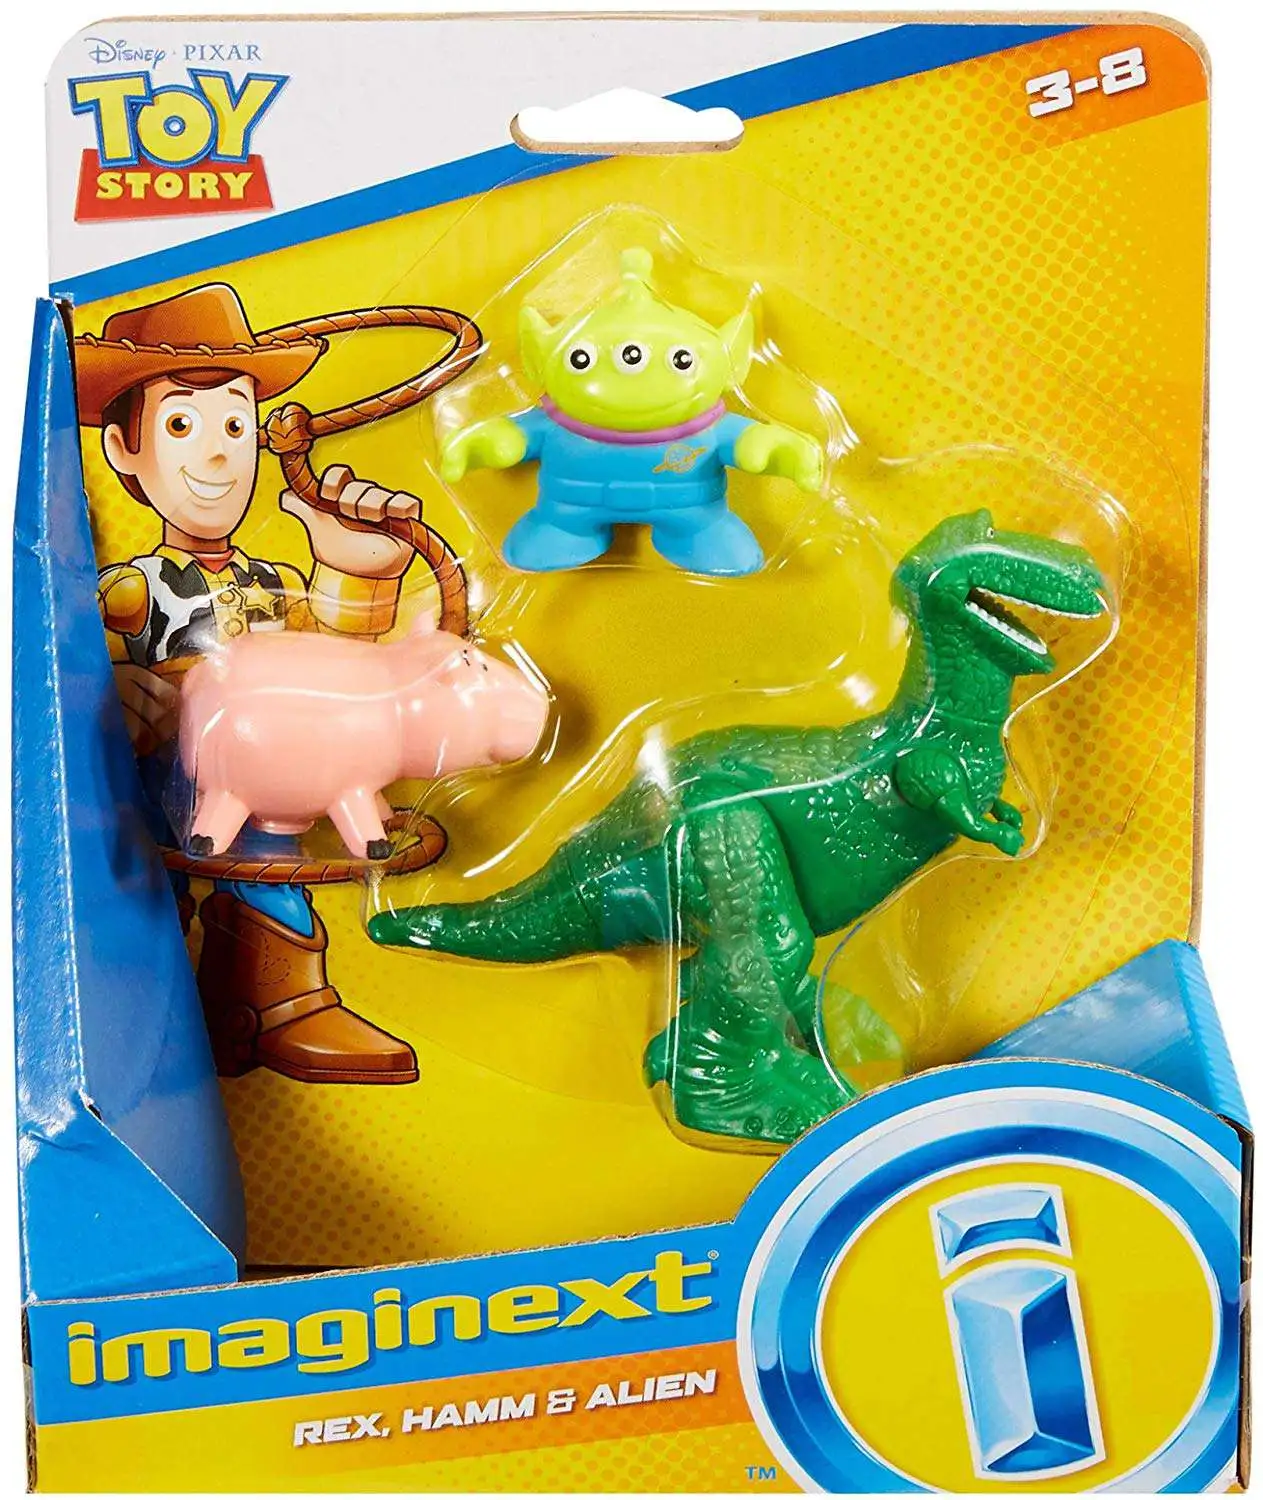 Fisher Price Disney / Pixar Imaginext Toy Story Rex, Hamm & Alien Figure 3-Pack Set